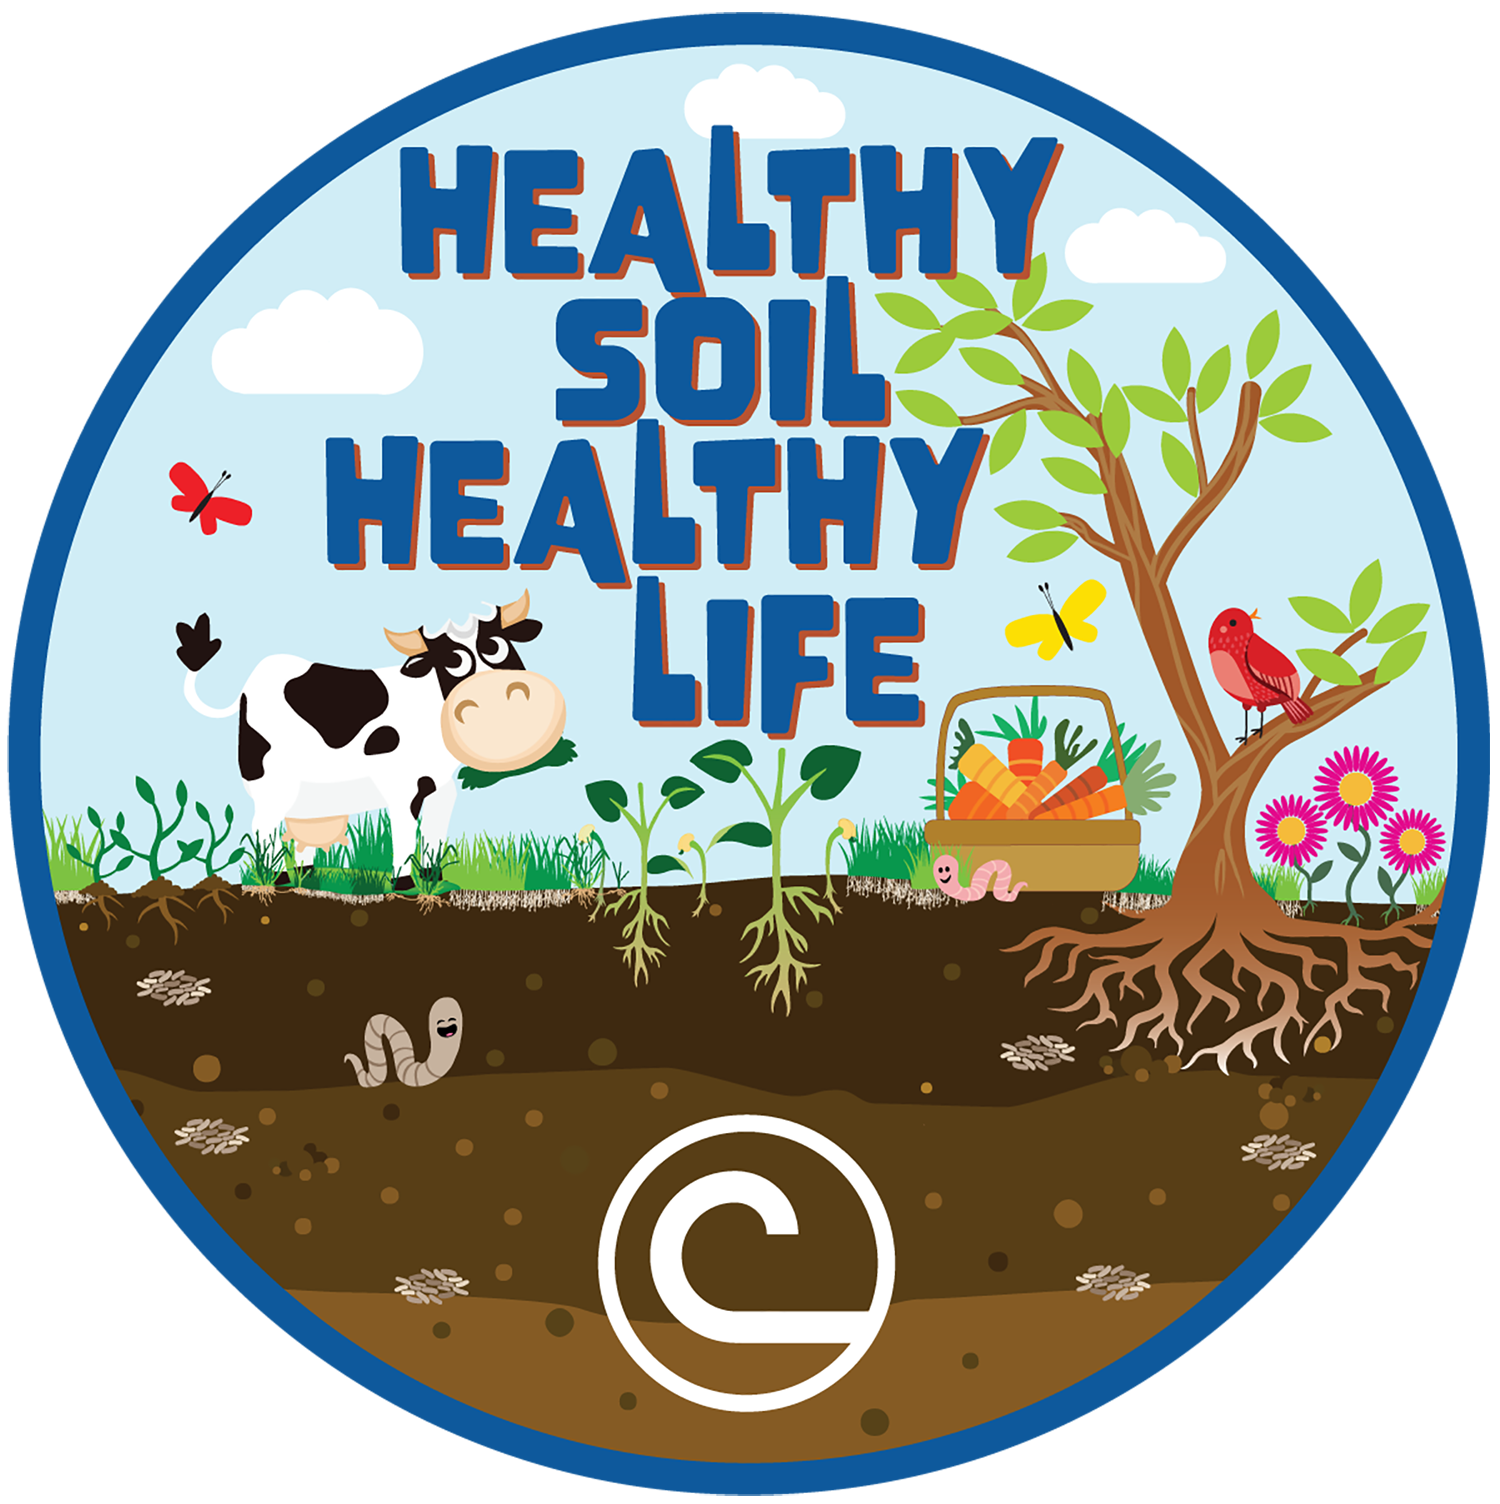 Healthy Soil, Healthy Life